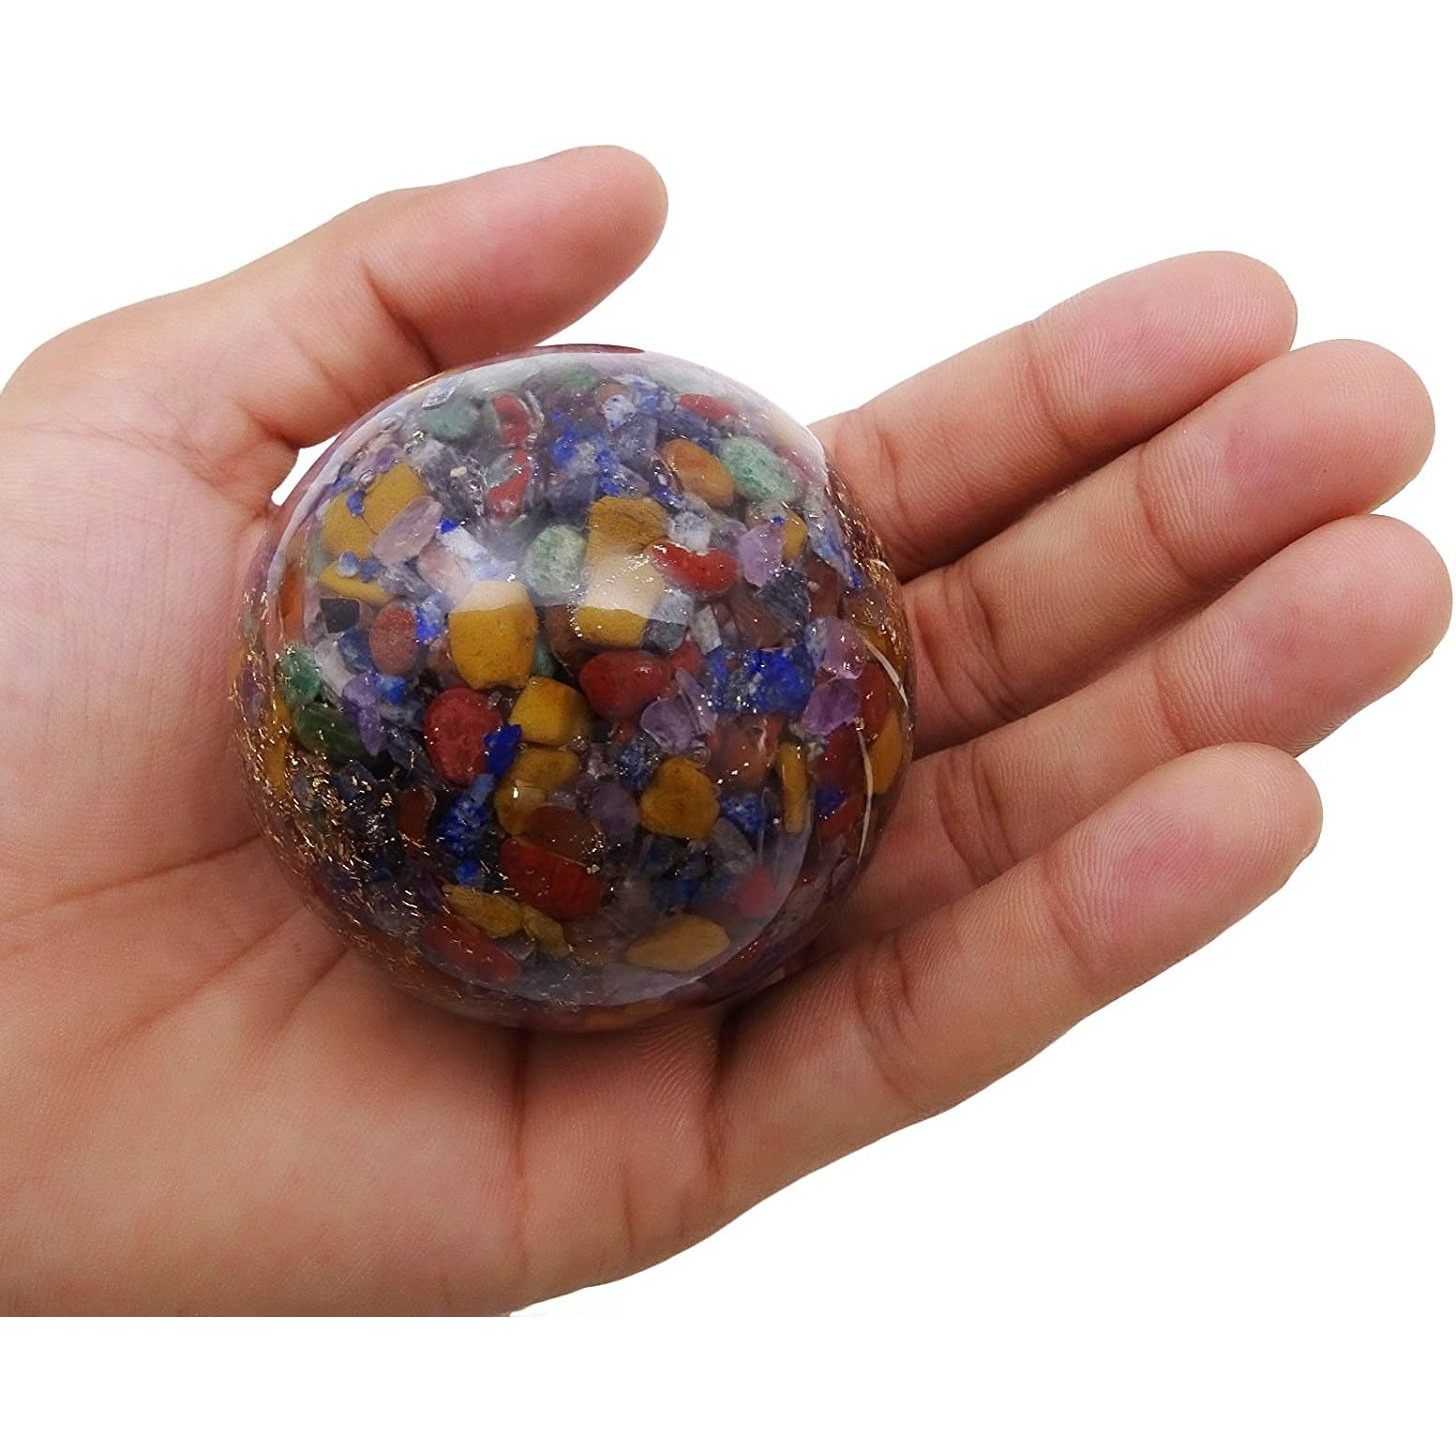 Winmaarc Reiki Healing Stone Ball Balancing Orgone Sphere Table Decor Gift